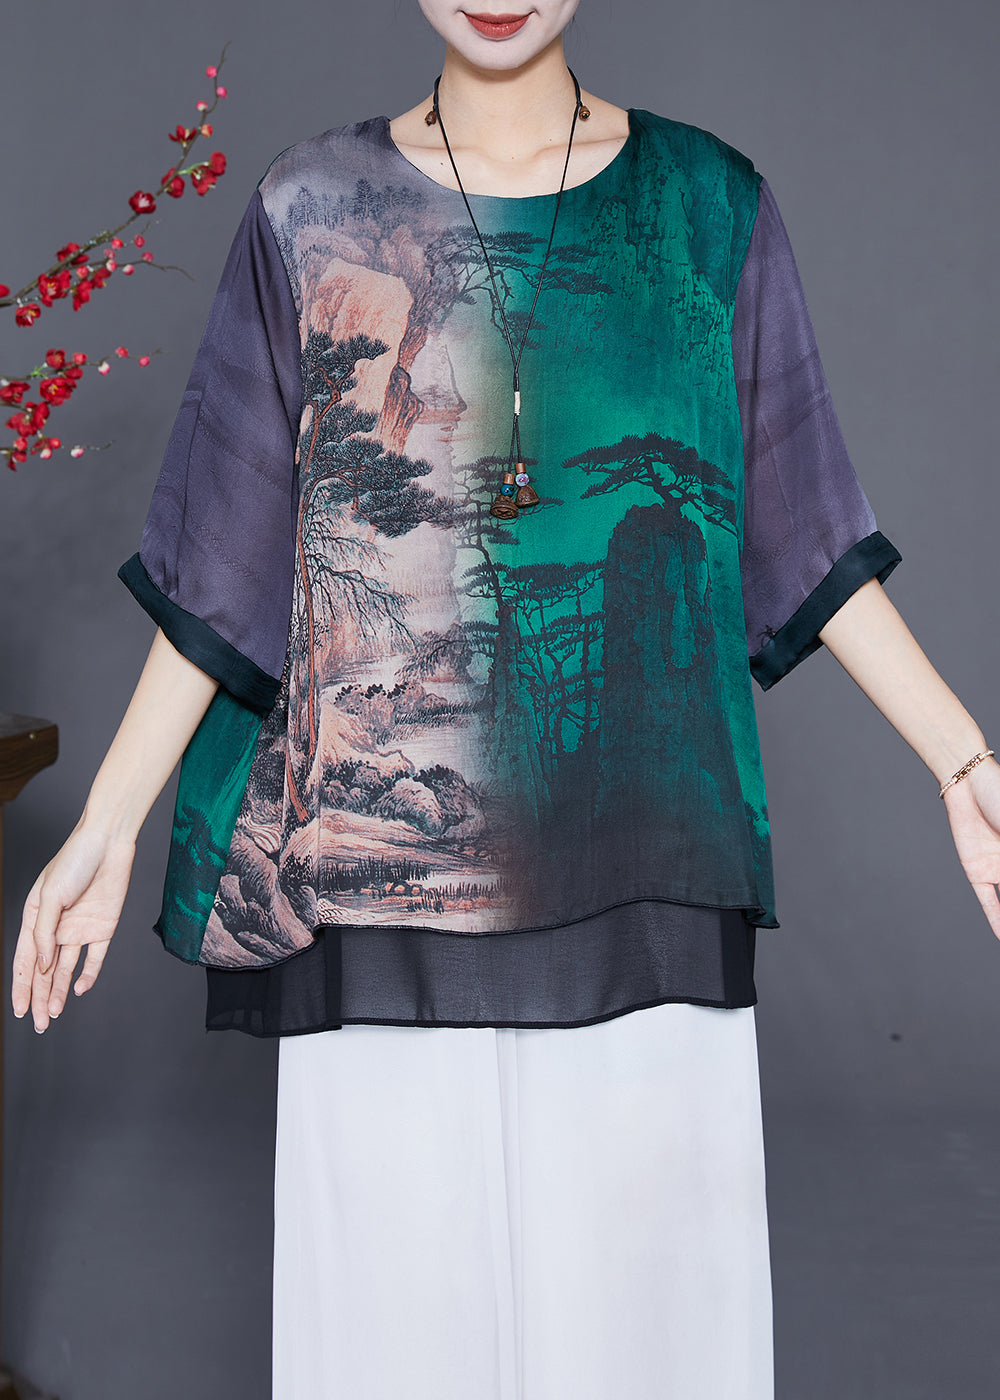 Art Oversized Patchwork Landscape Painting Silk Shirt Half Sleeve